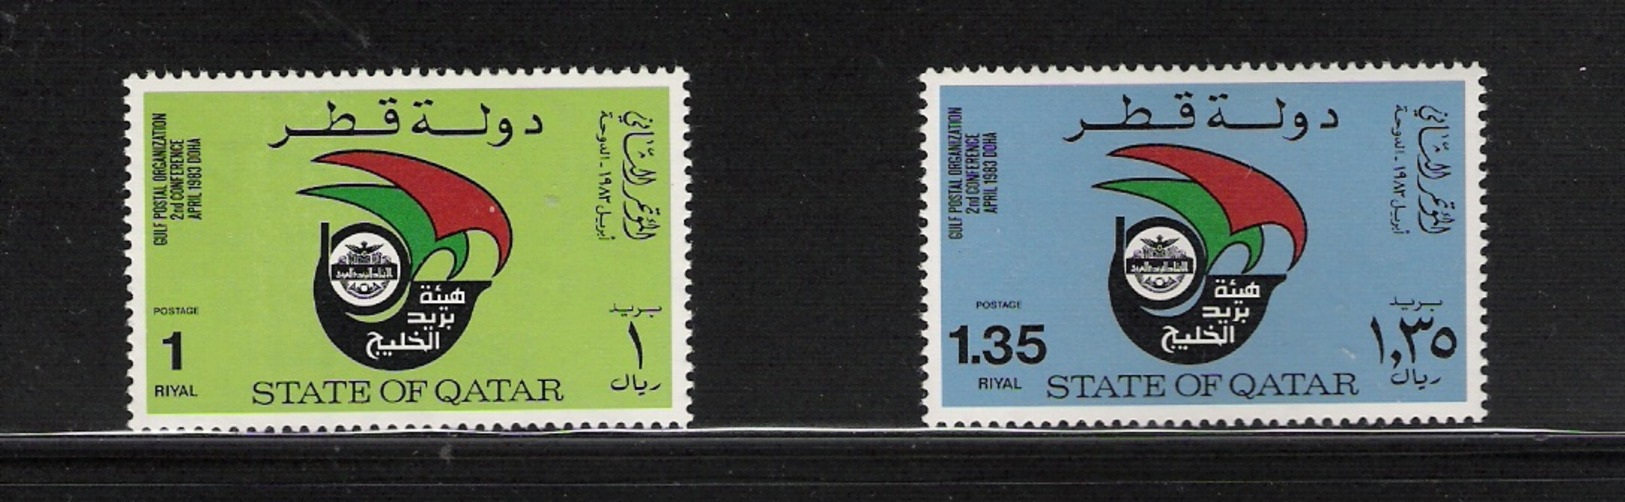 QATAR , 1983 2nd Conference Gulf Postal Organization 2v MNH - Qatar